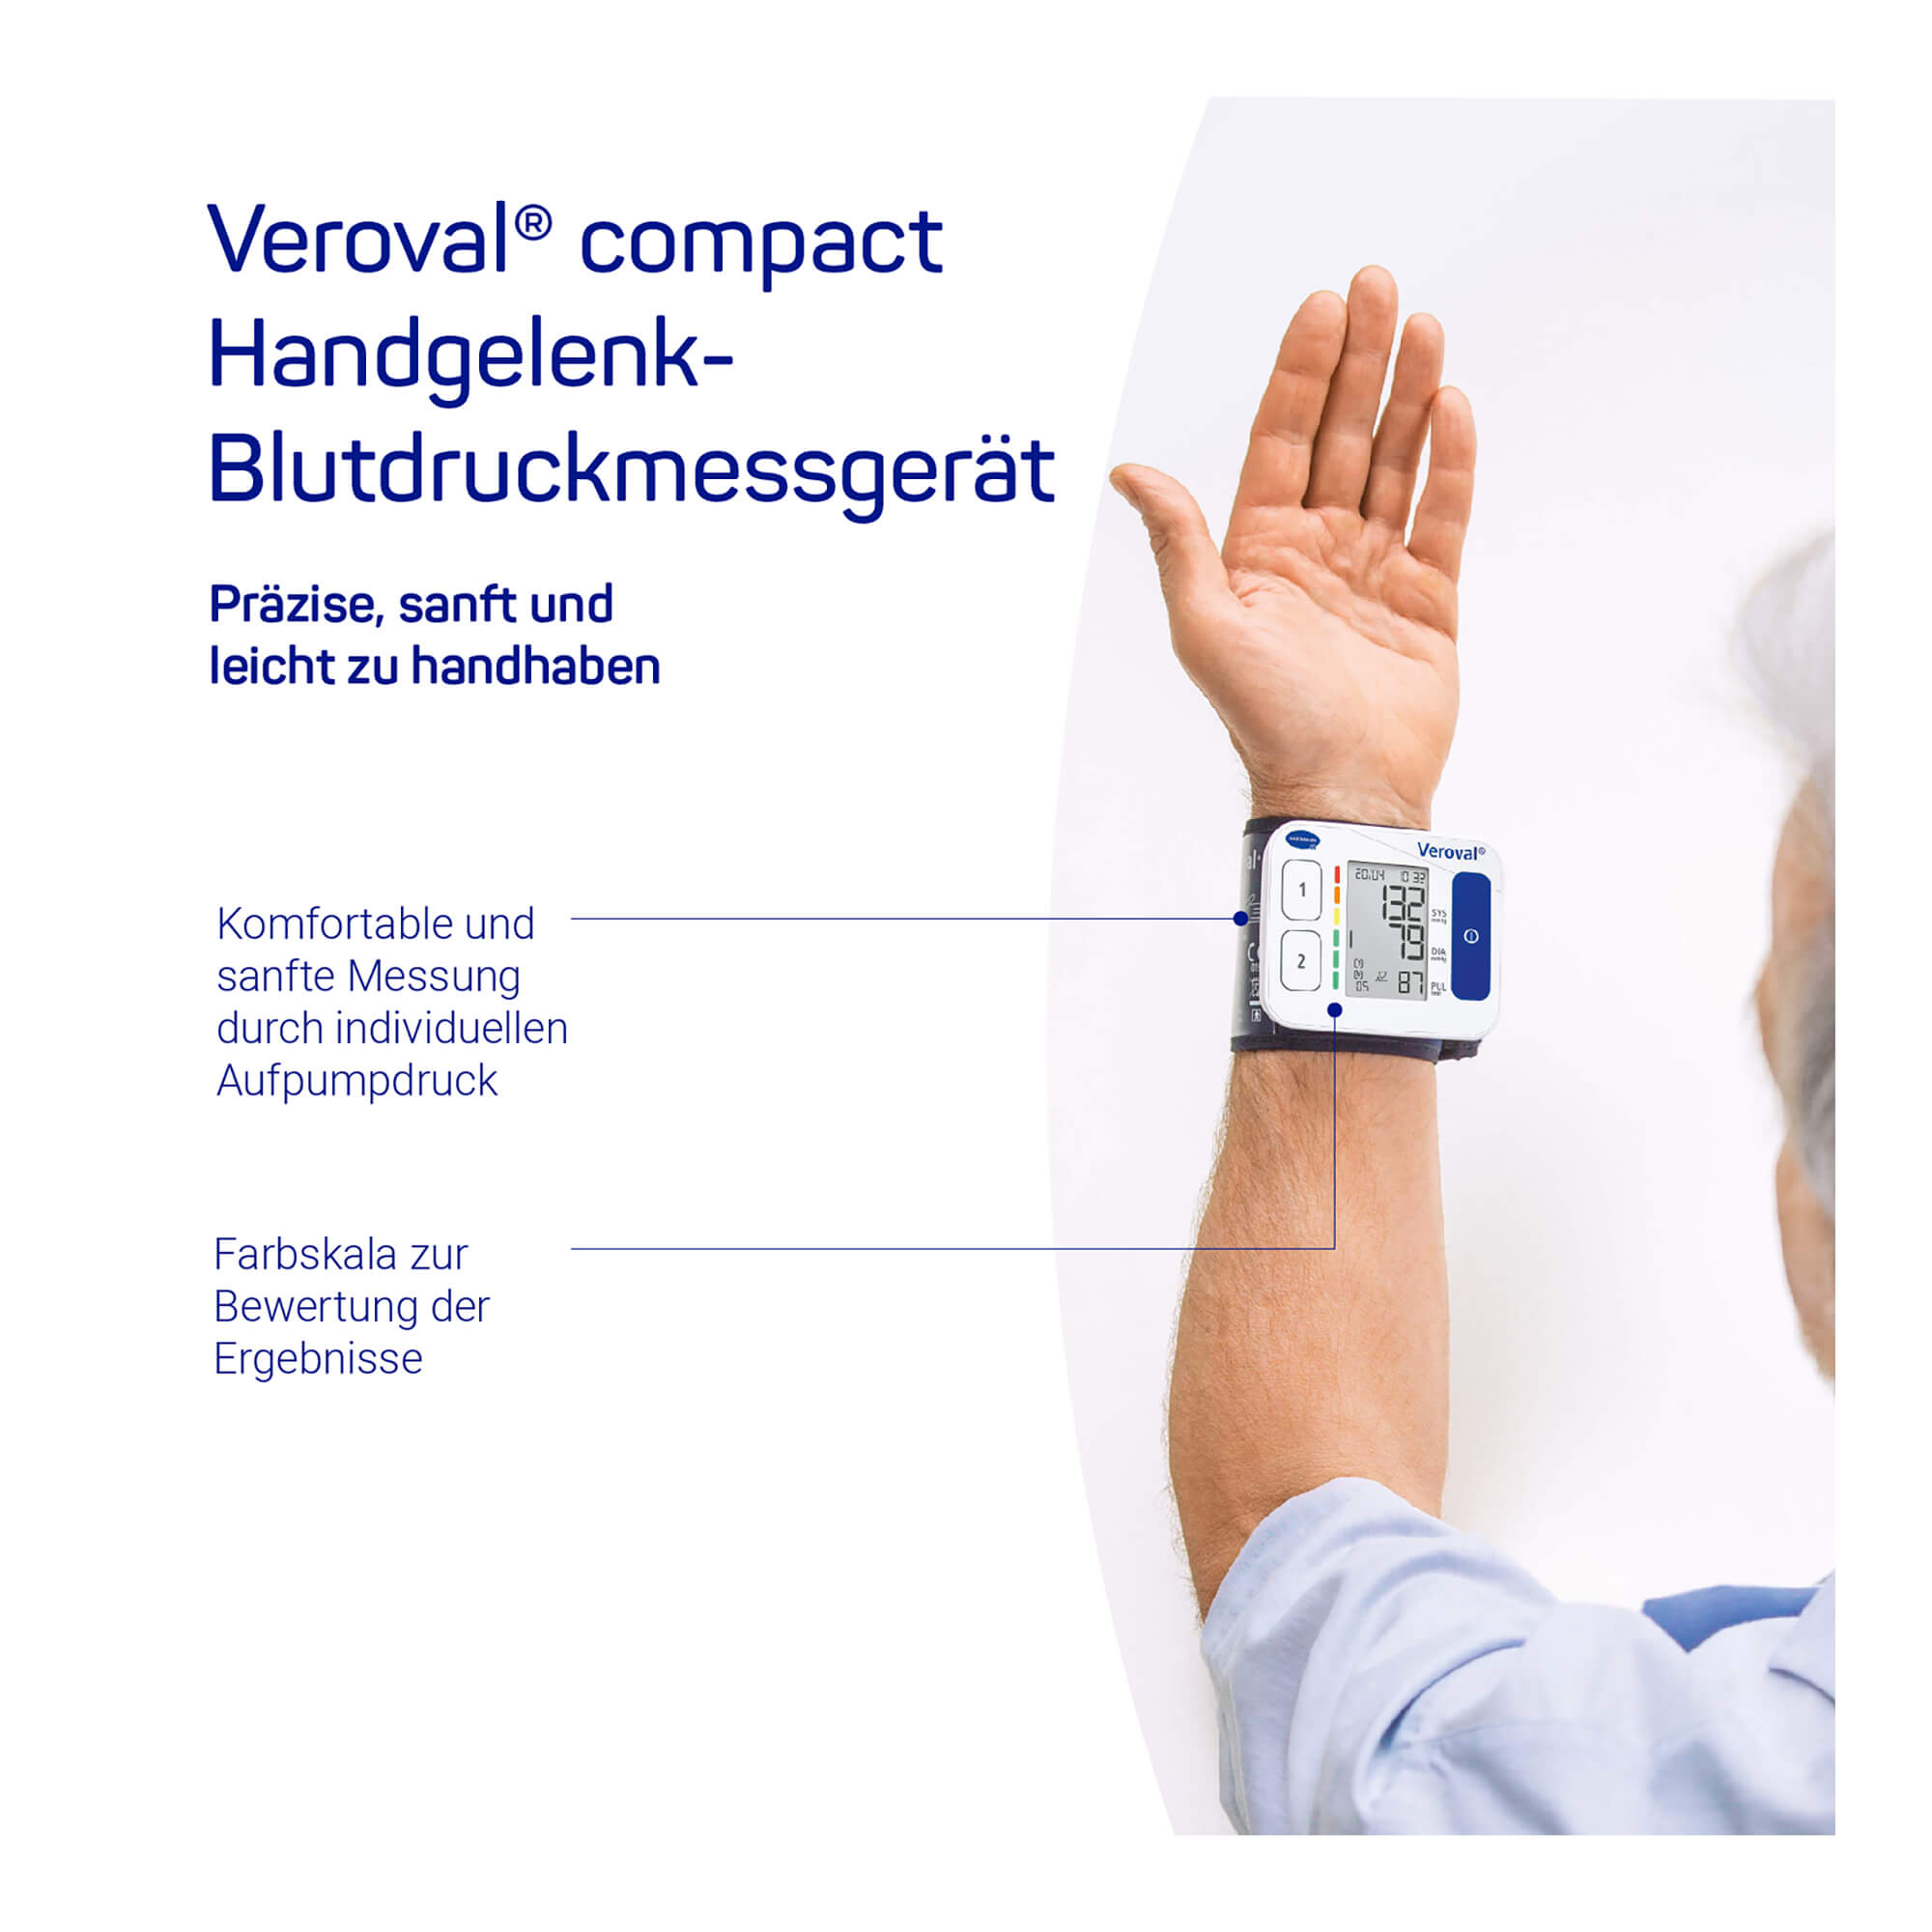 Veroval compact Handgelenk-Blutdruckmessgerät Vorteile